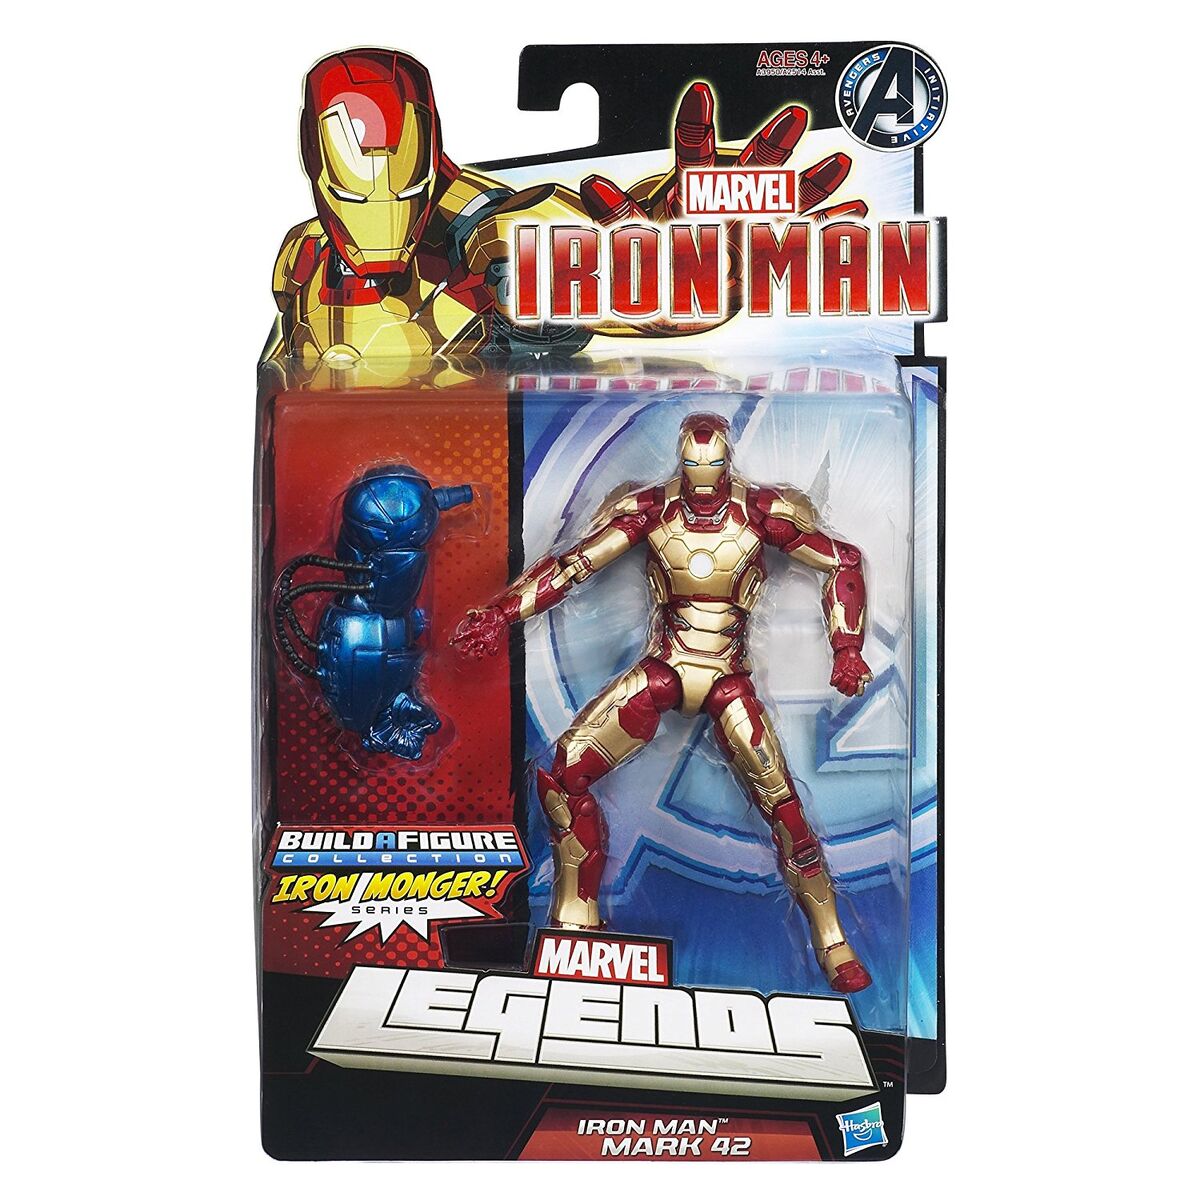 Iron Man 3 action figures, Marvel Movies